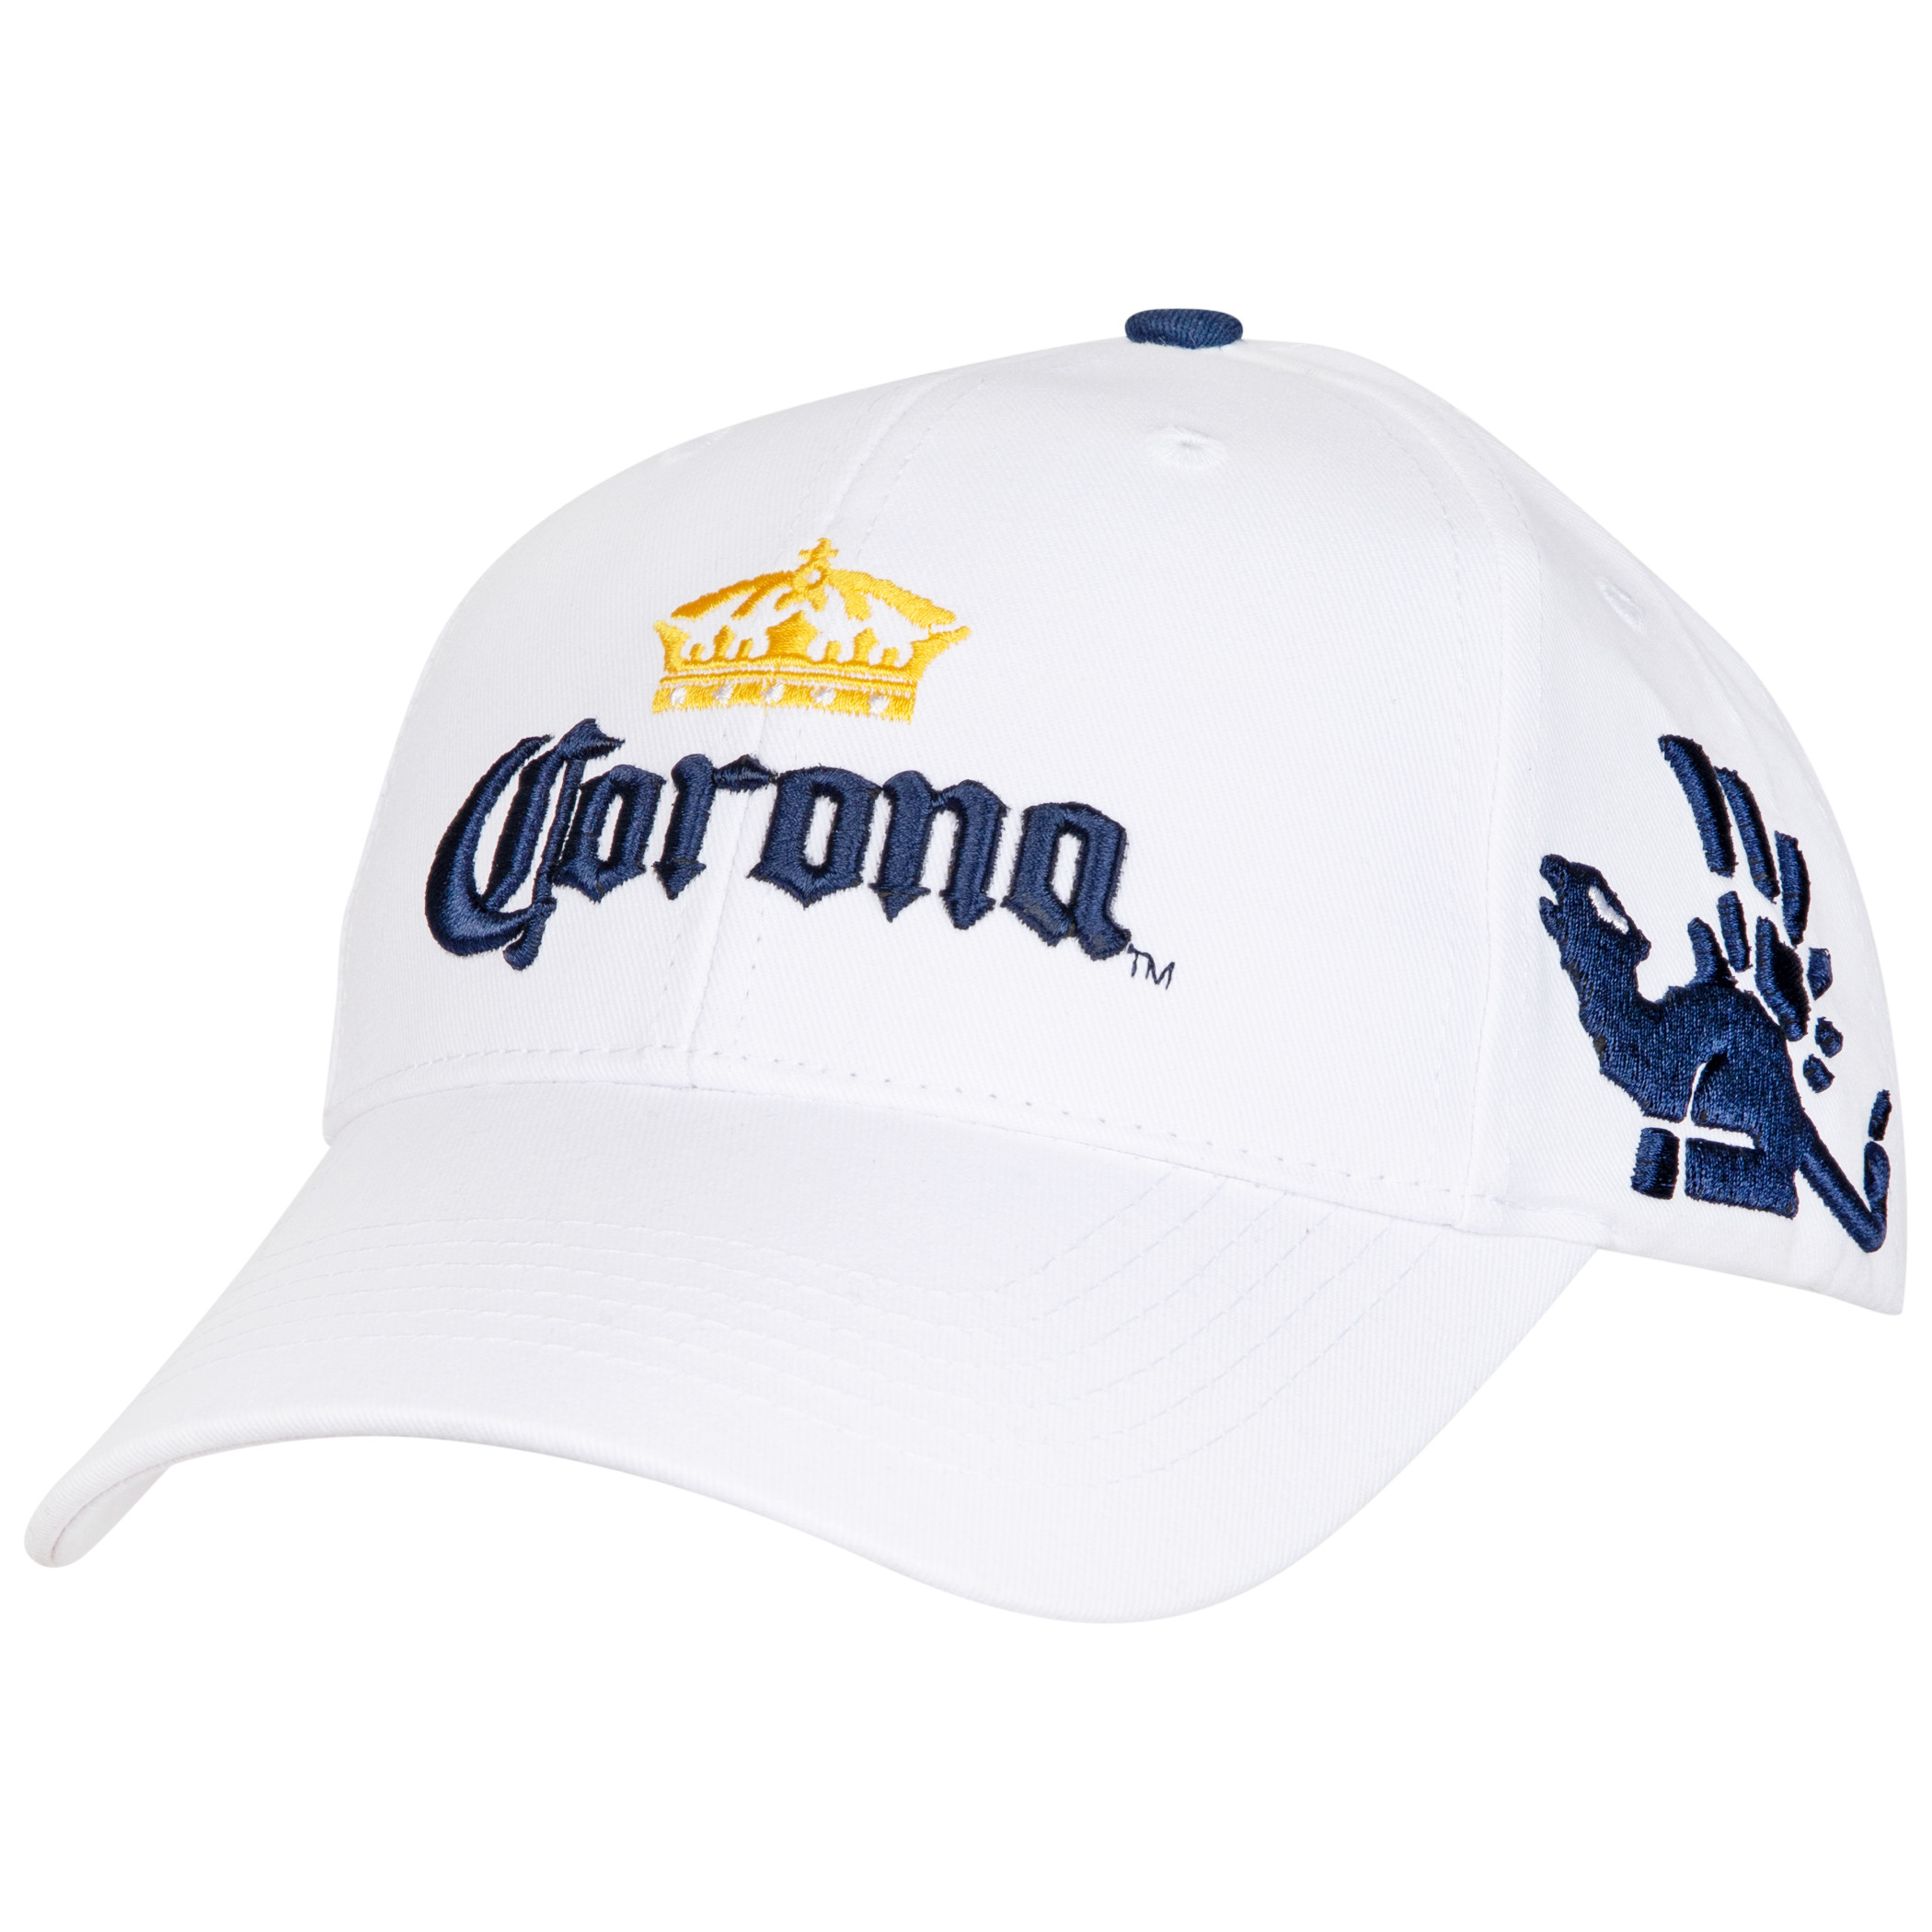 Corona Extra Crown White Adjustable Strapback Hat